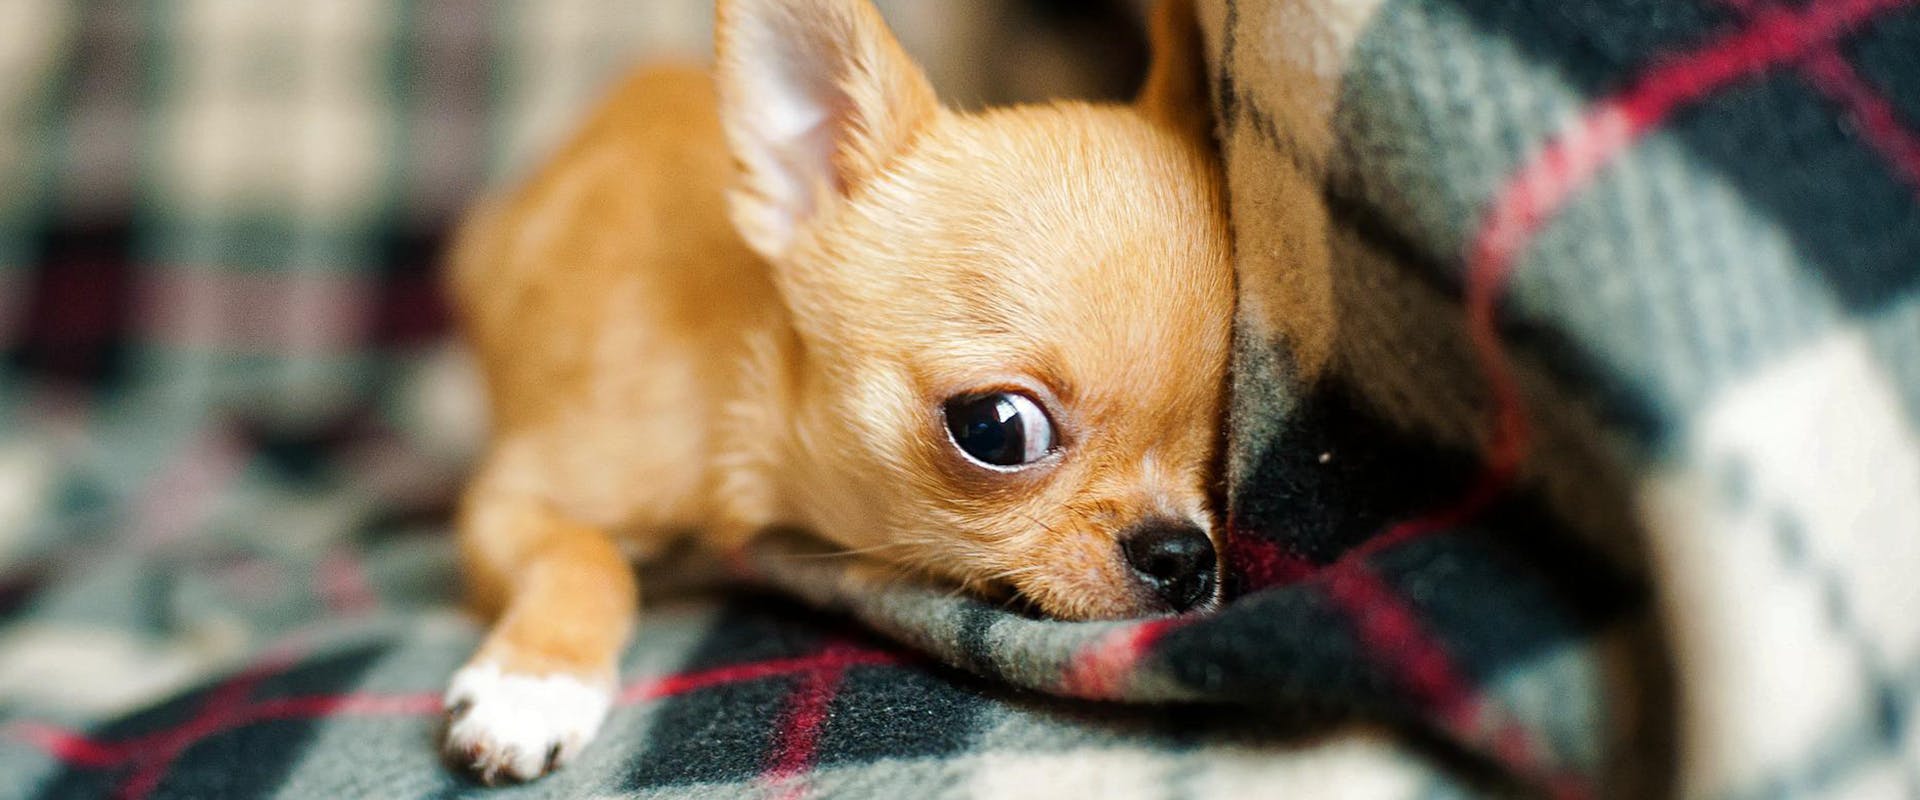 A cute Chihuahua puppy snuggled up in a blanket